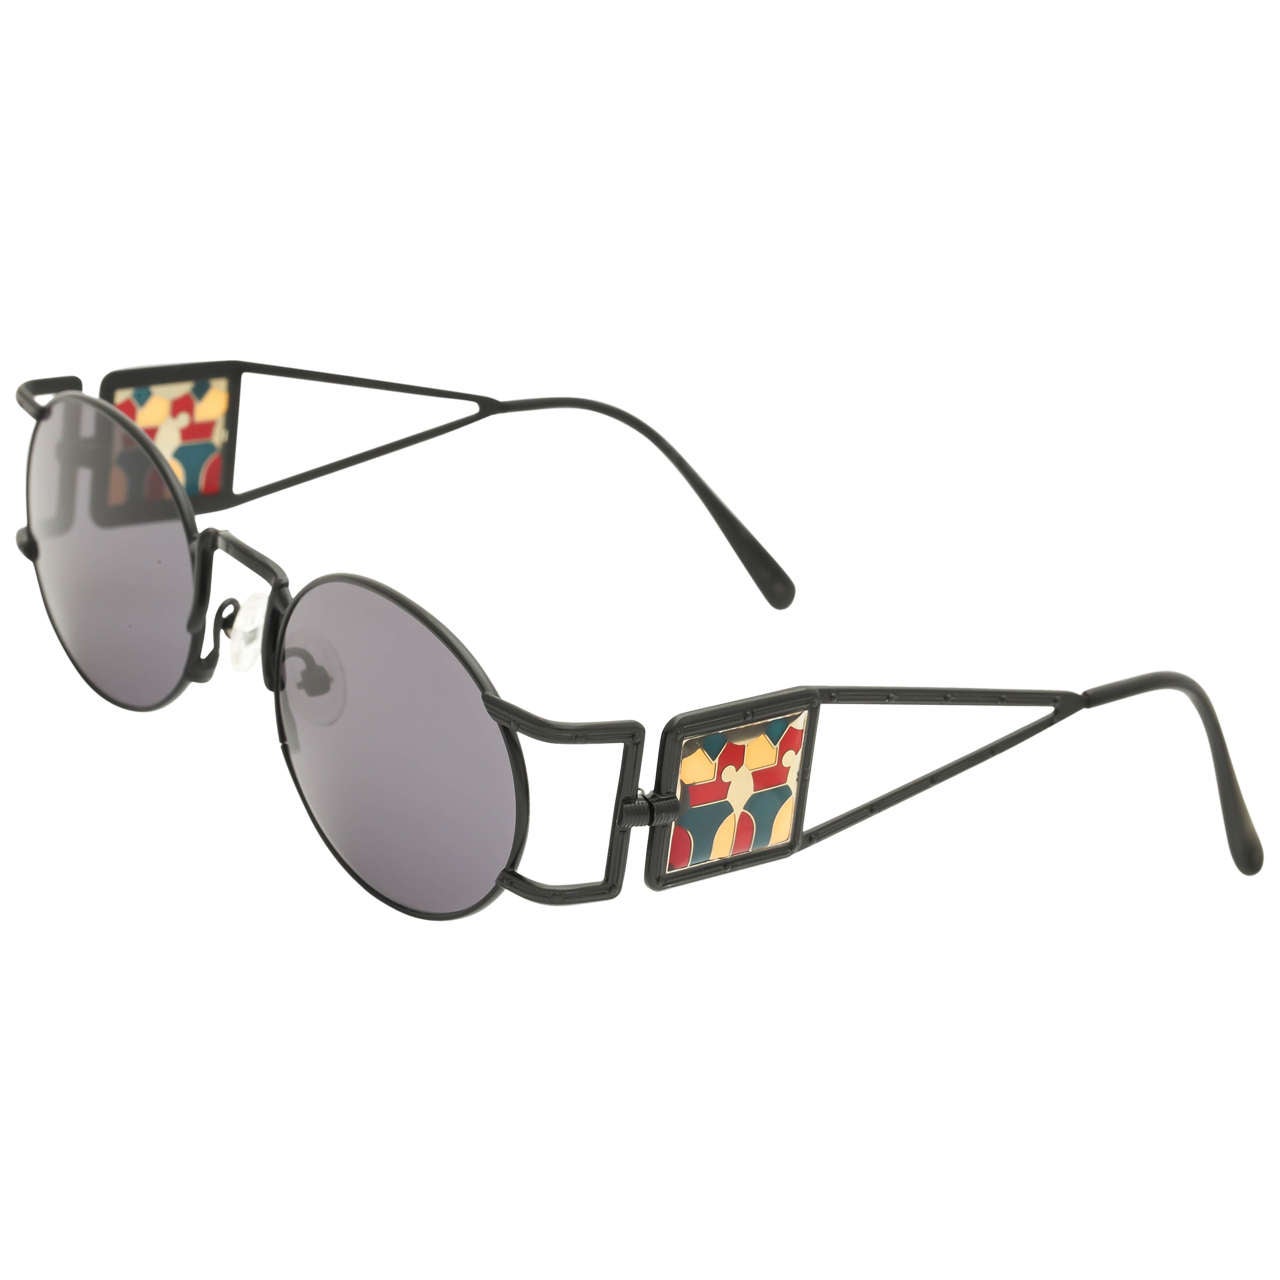 Jean Paul Gaultier Vintage Sunglasses 56-4672 For Sale